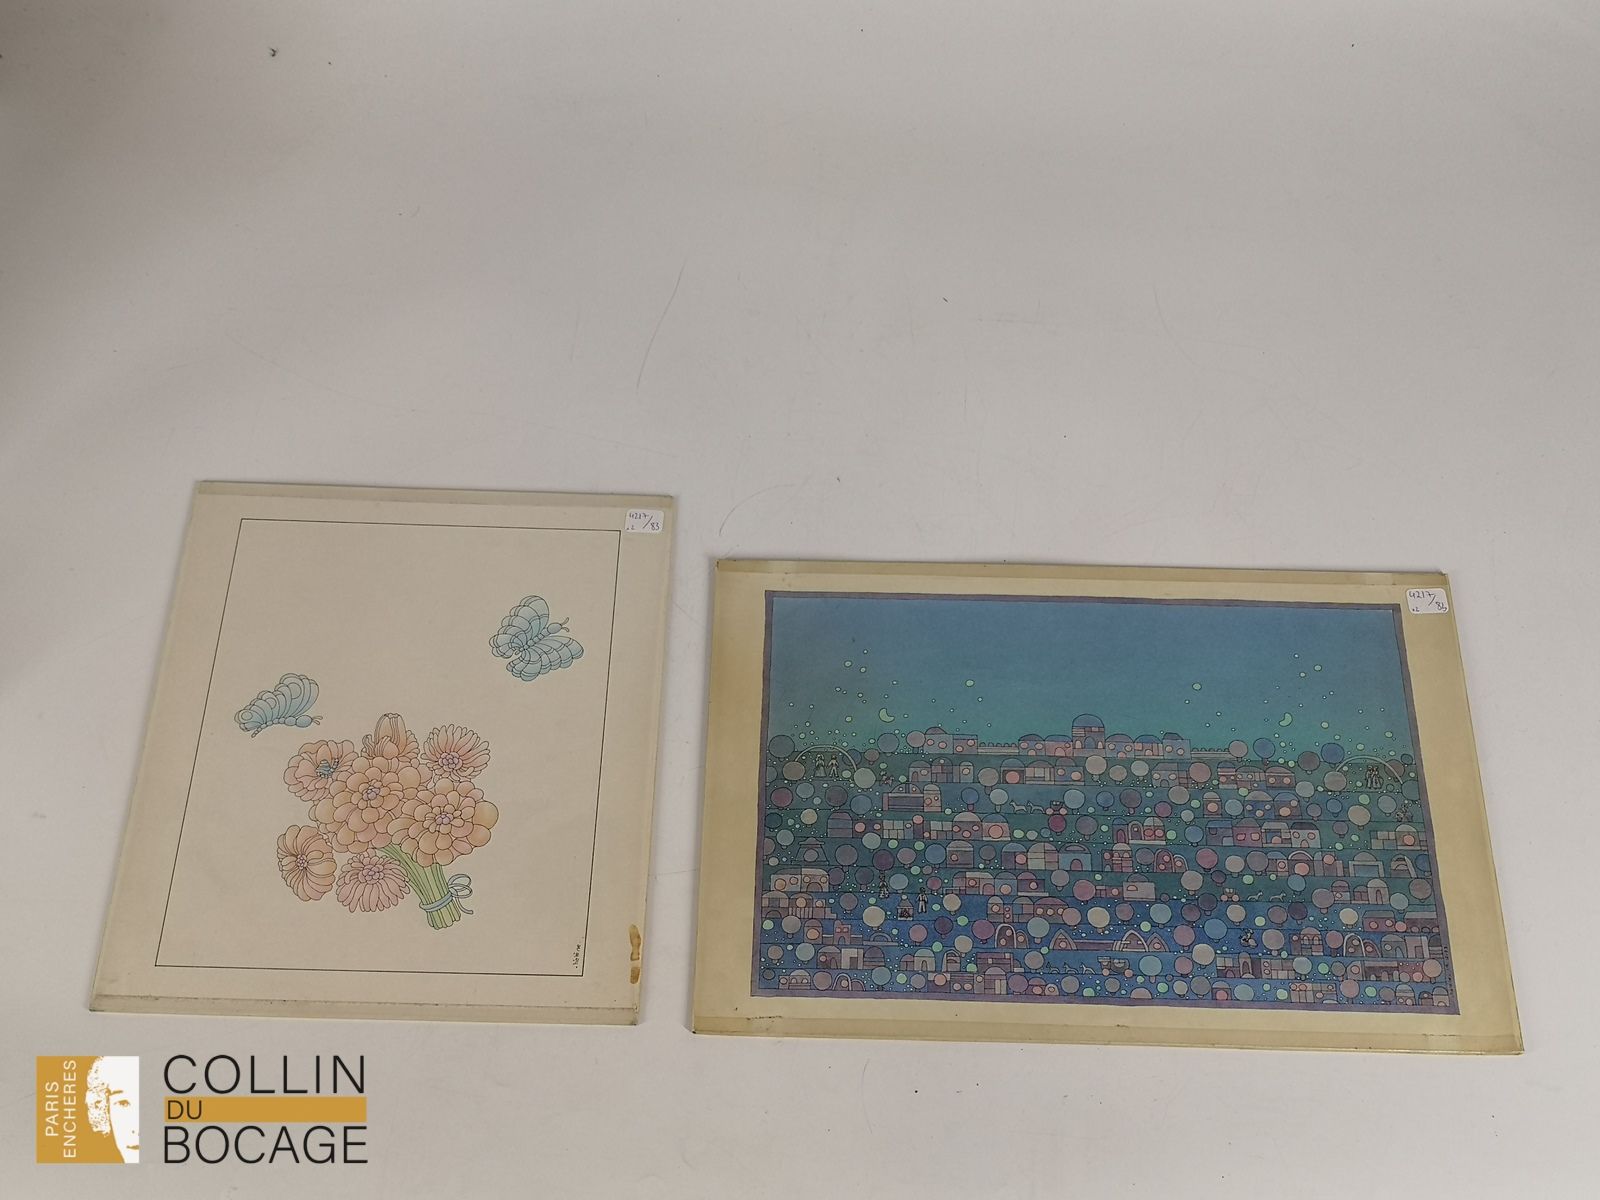 Null 插图
埃莱娜-布罗切（1948-2023） 
蓝色风景
纸面水墨画，右下方有签名和日期 19.12.73 
24 x 36 厘米 

蝴蝶与花束 
纸&hellip;